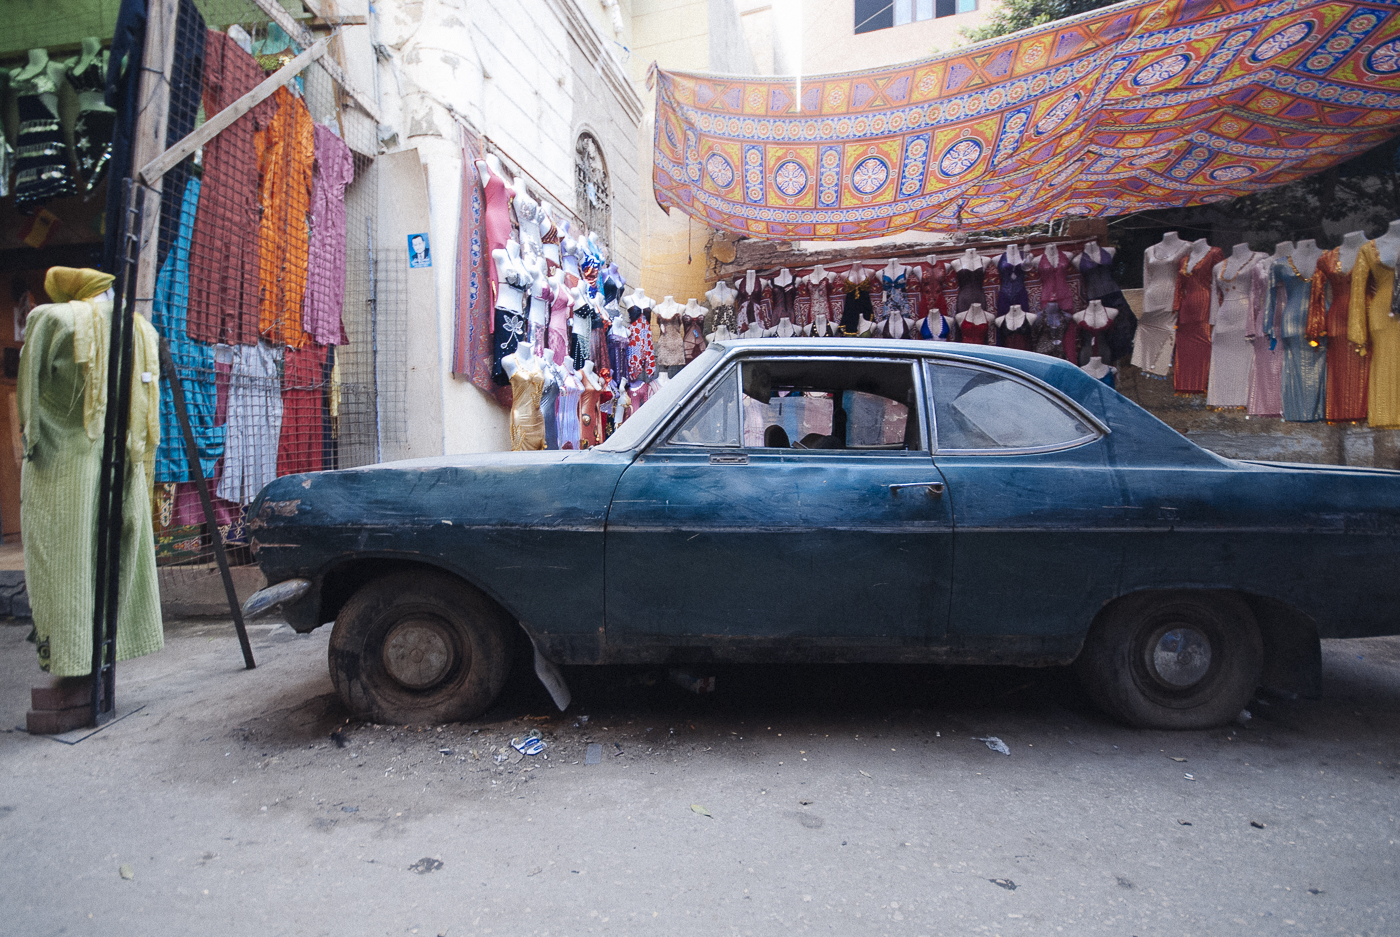 Cairo, Egypt old car on street